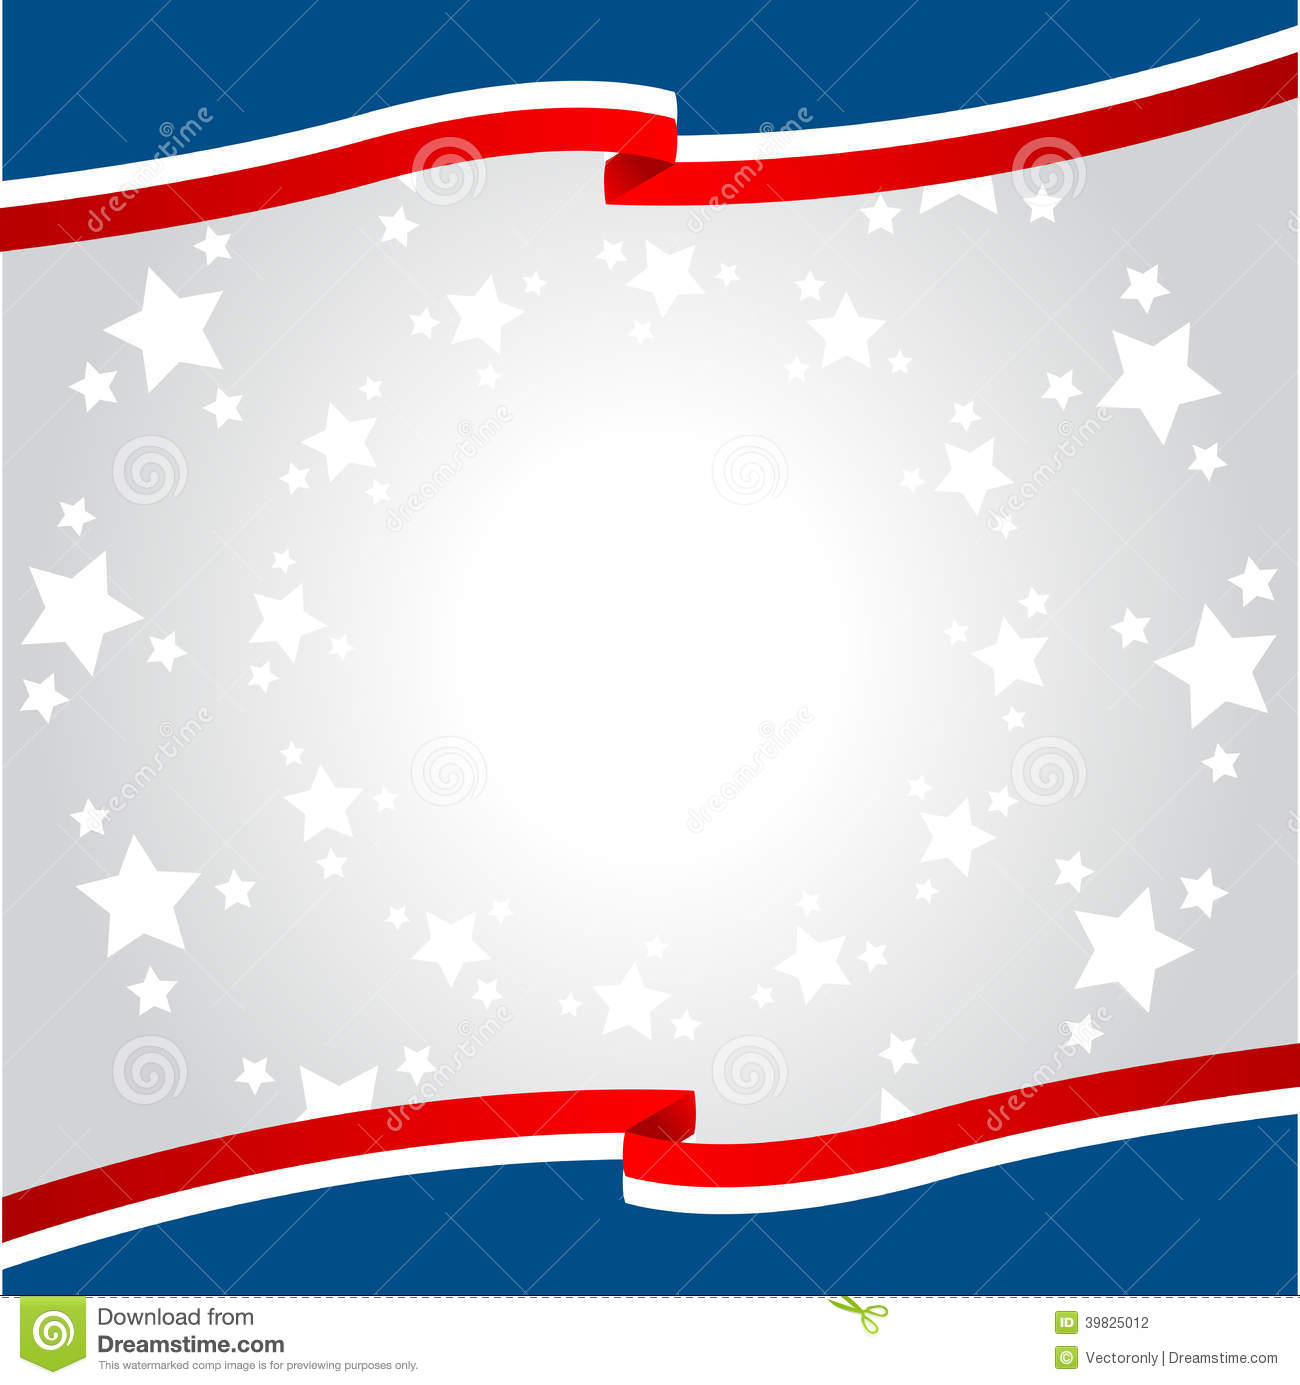 Best Photos Of Free Patriotic Powerpoint Templates – July For Patriotic Powerpoint Template